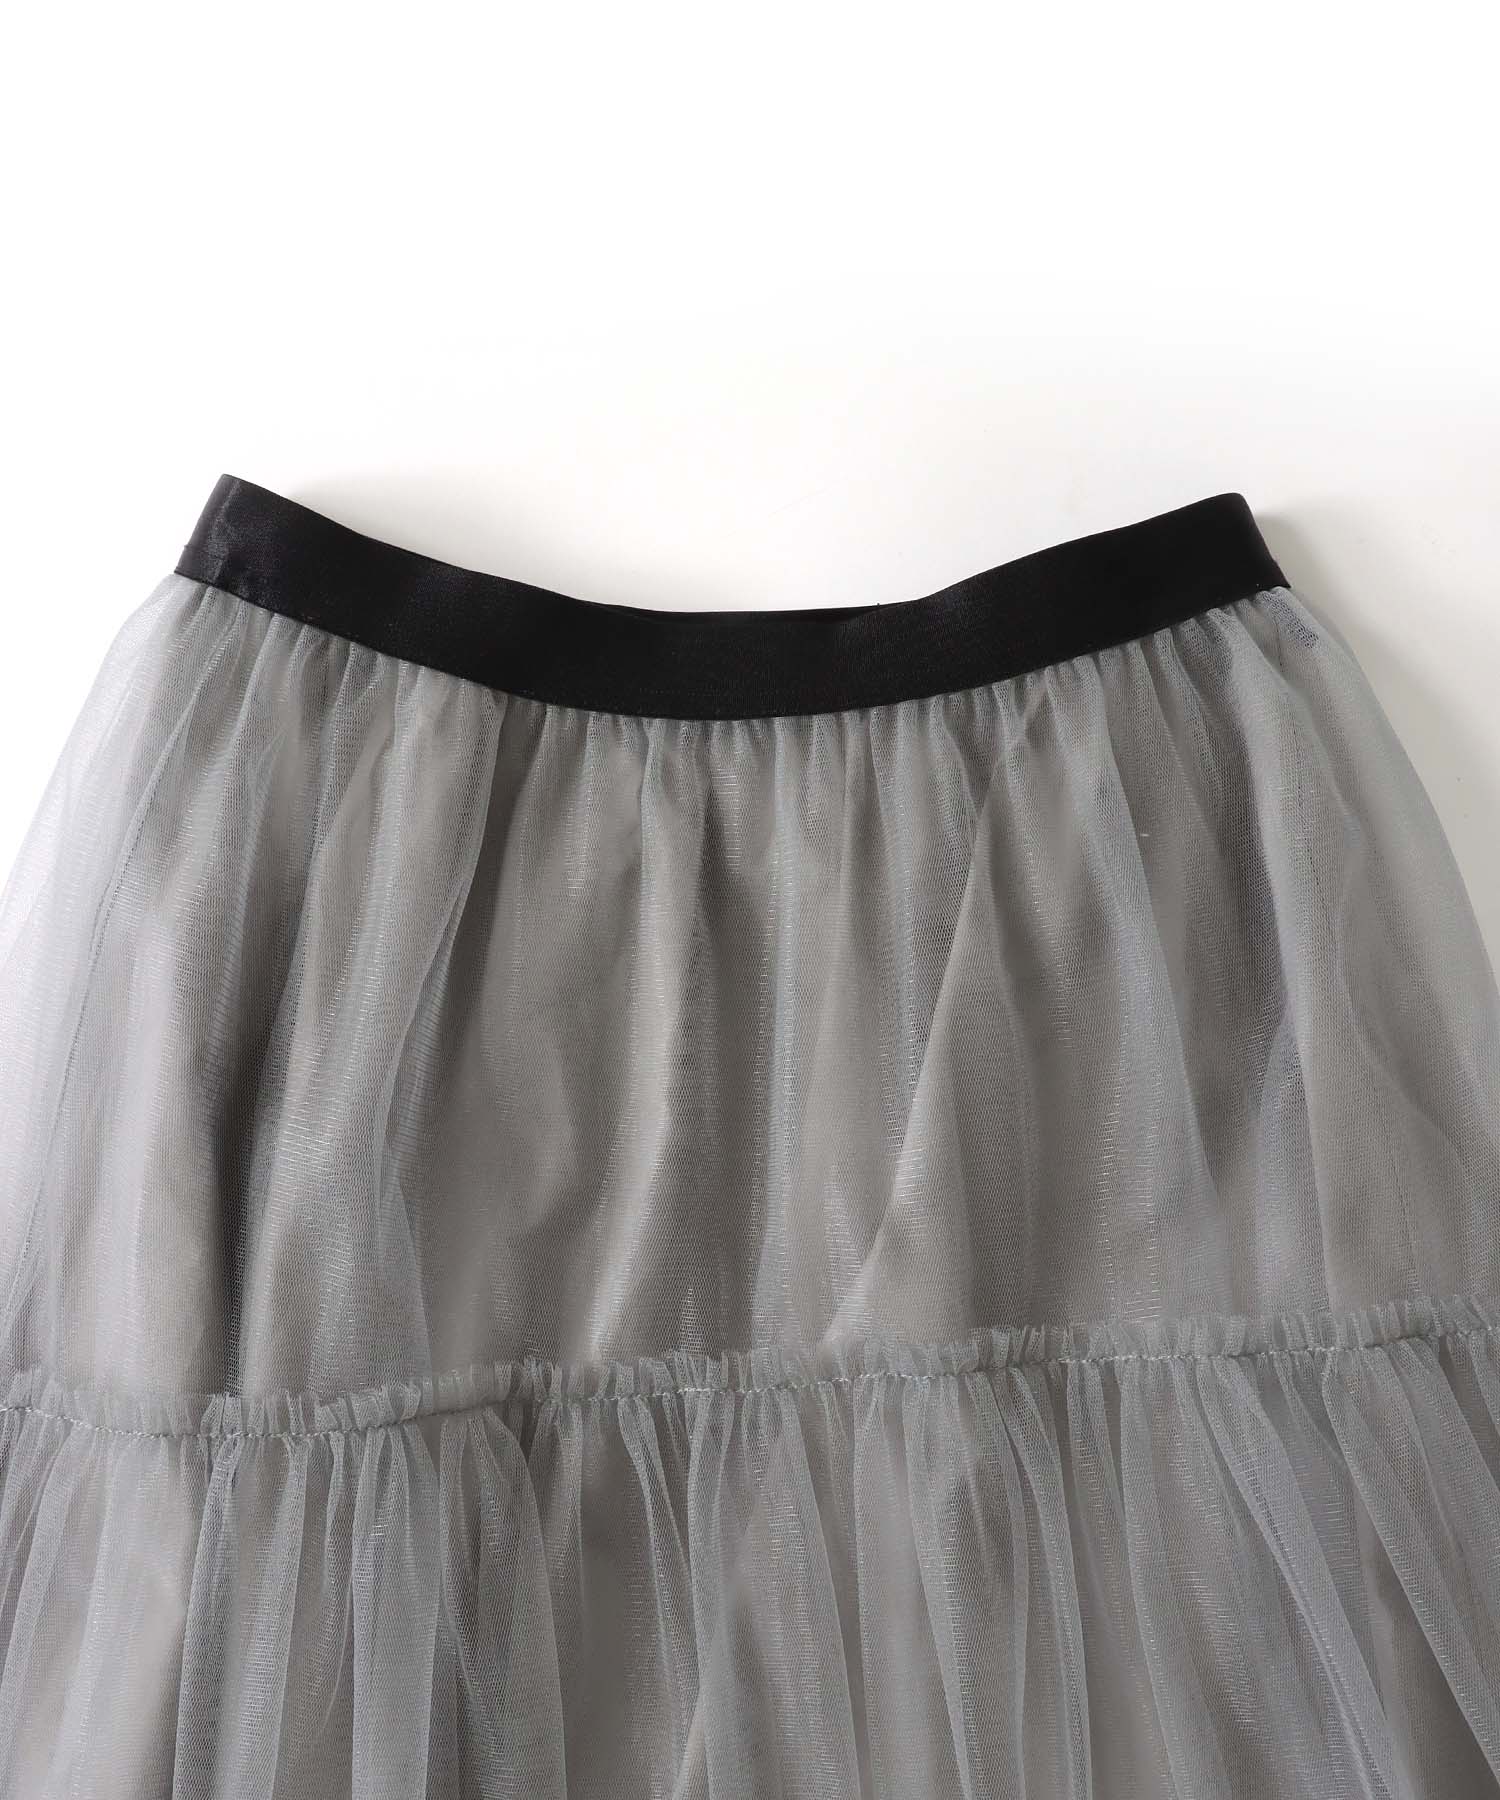 tulle gathered skirt